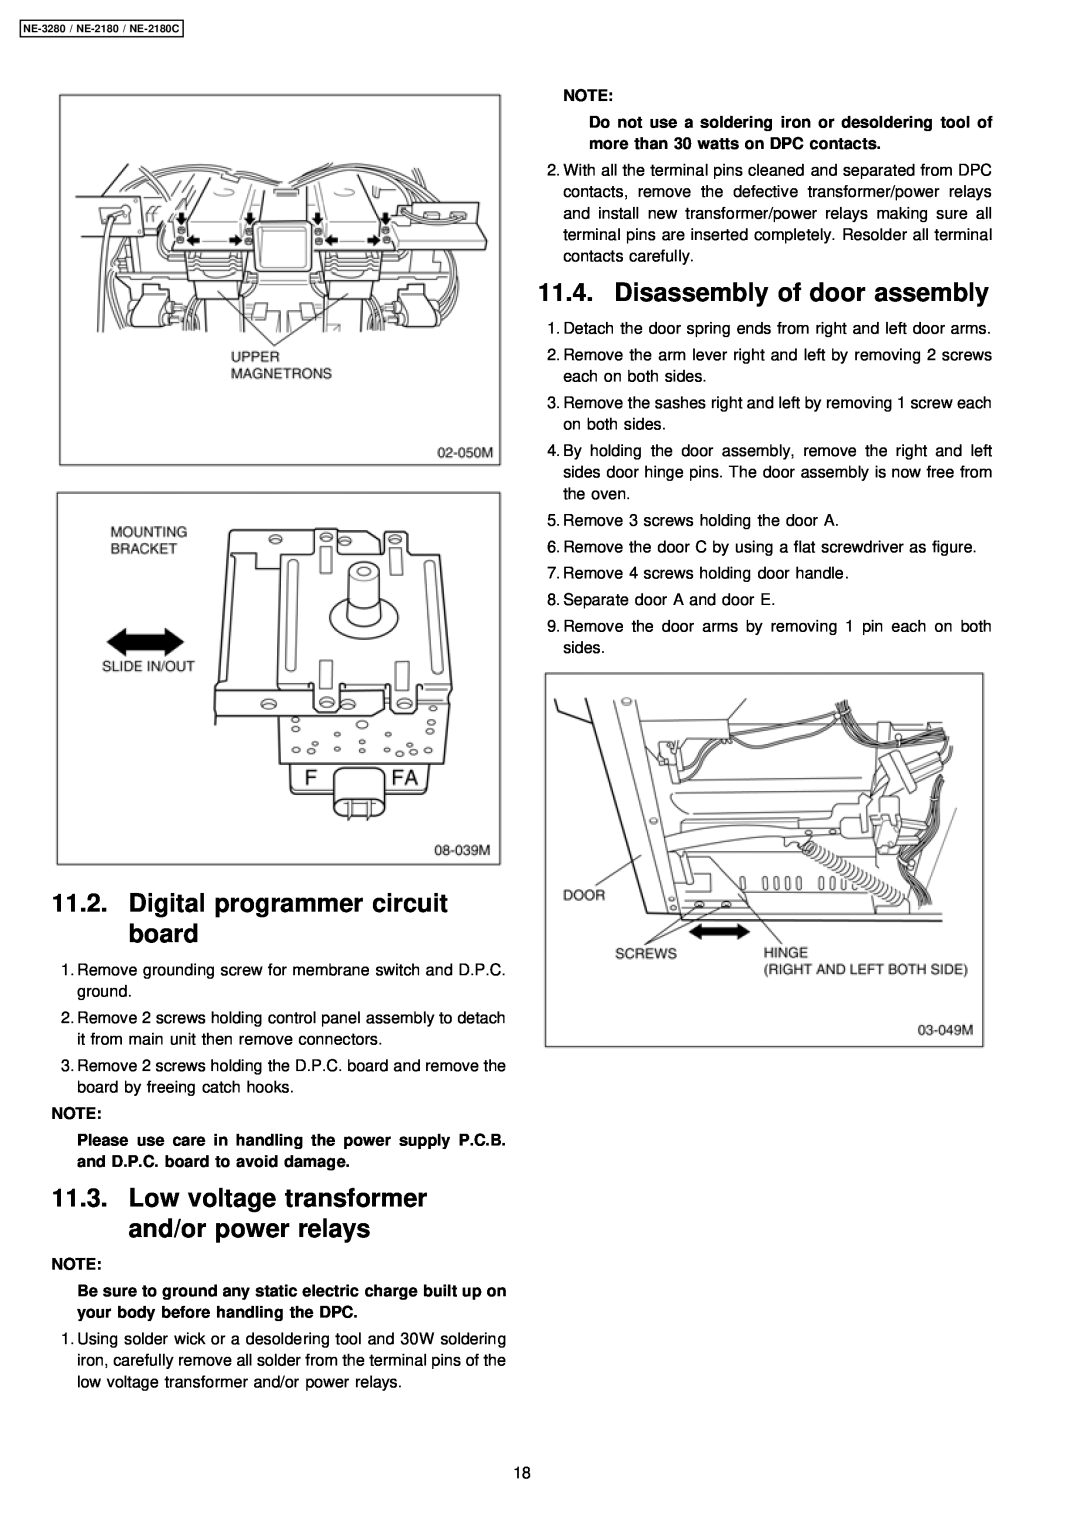 Panasonic NE-3280, NE-2180C manual Disassembly of door assembly, Digital programmer circuit board 